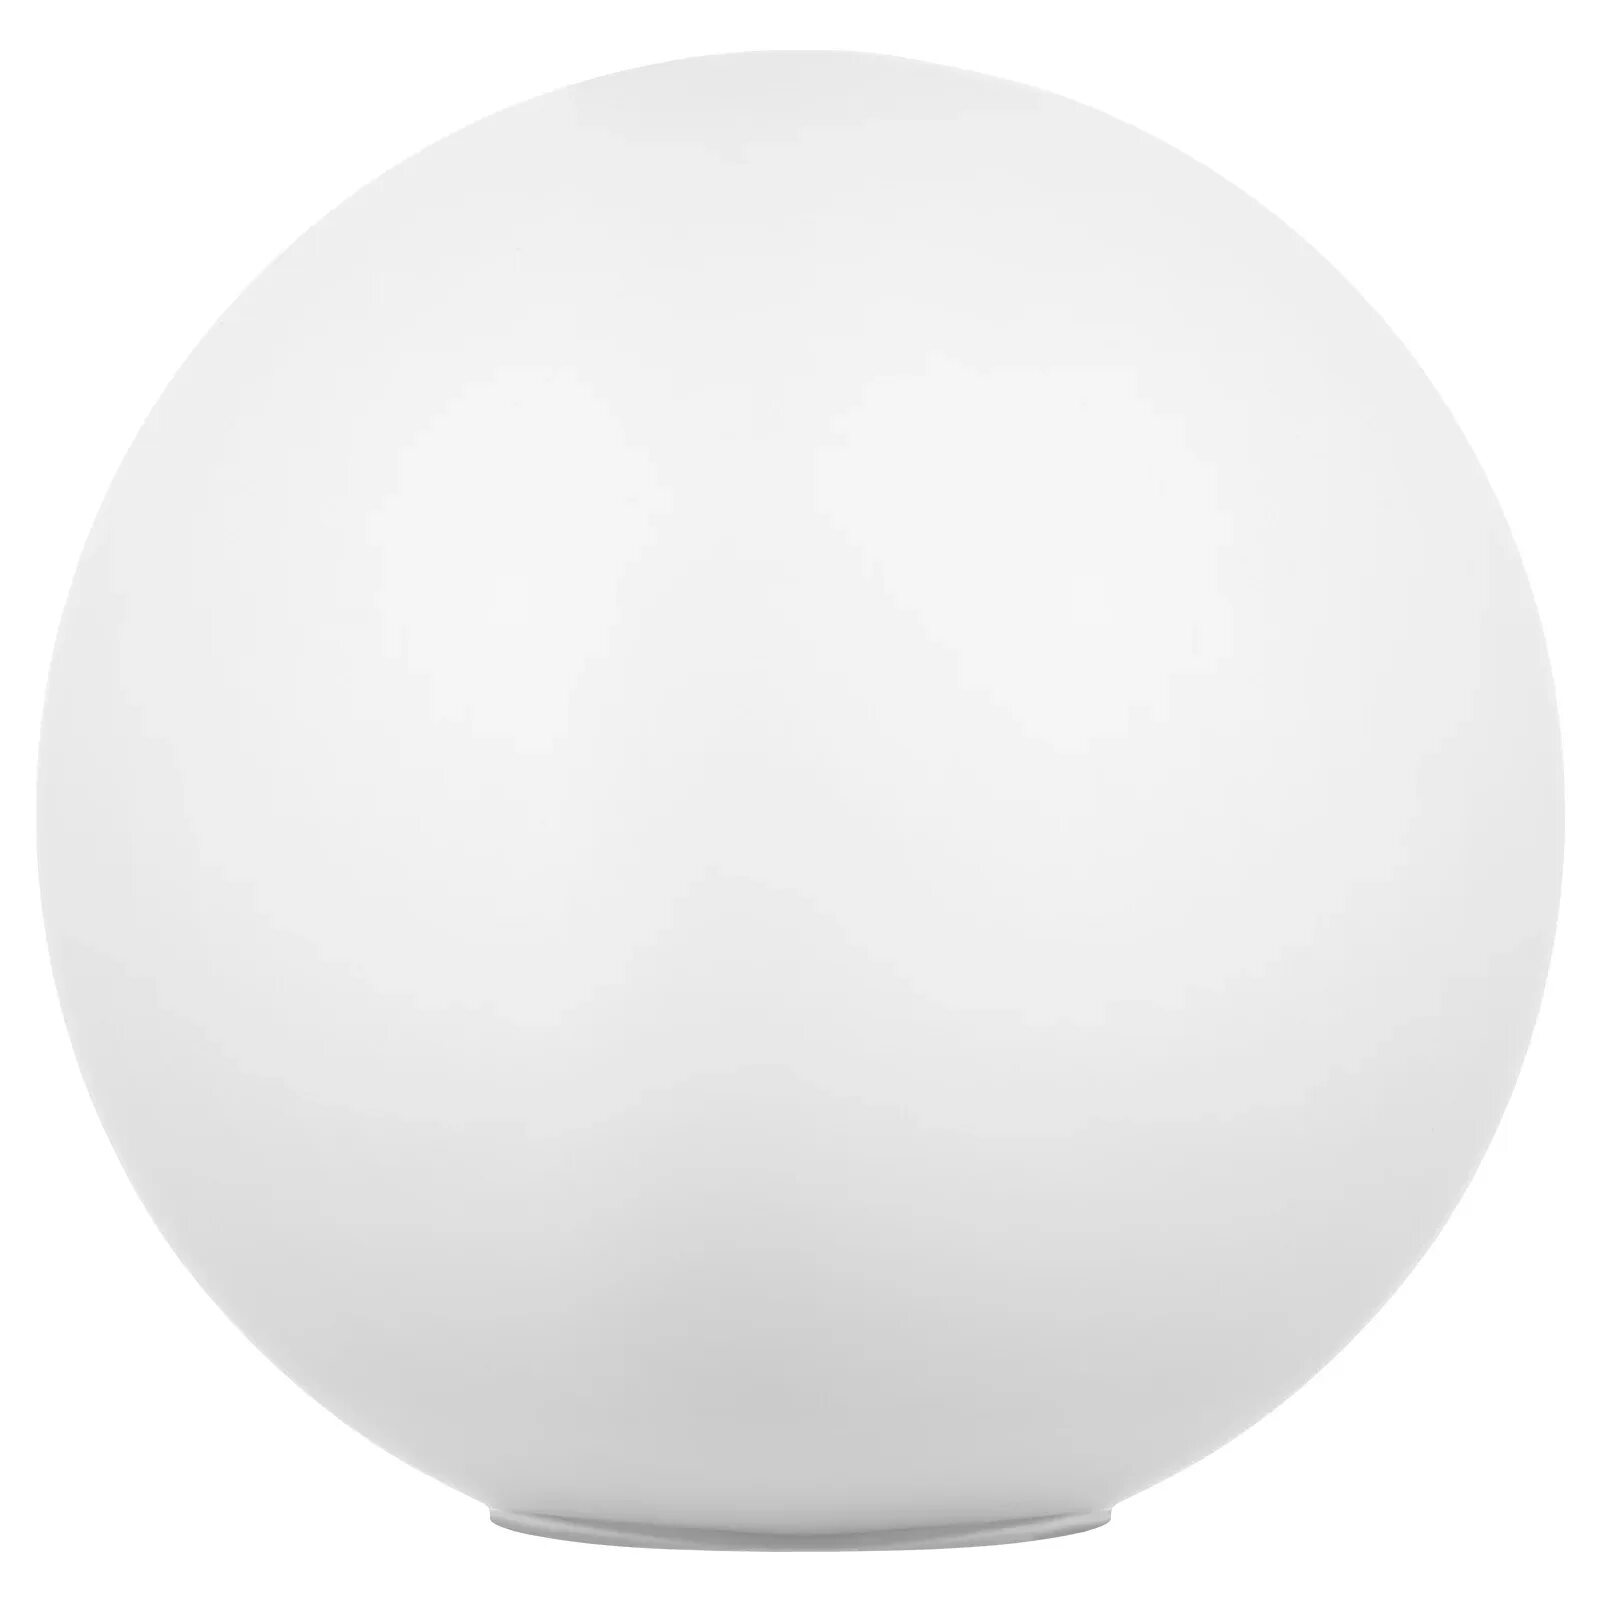 Шар белый свет. Глянцевый шар. Белый шар. Шар белый круглый. Объемный белый шар.